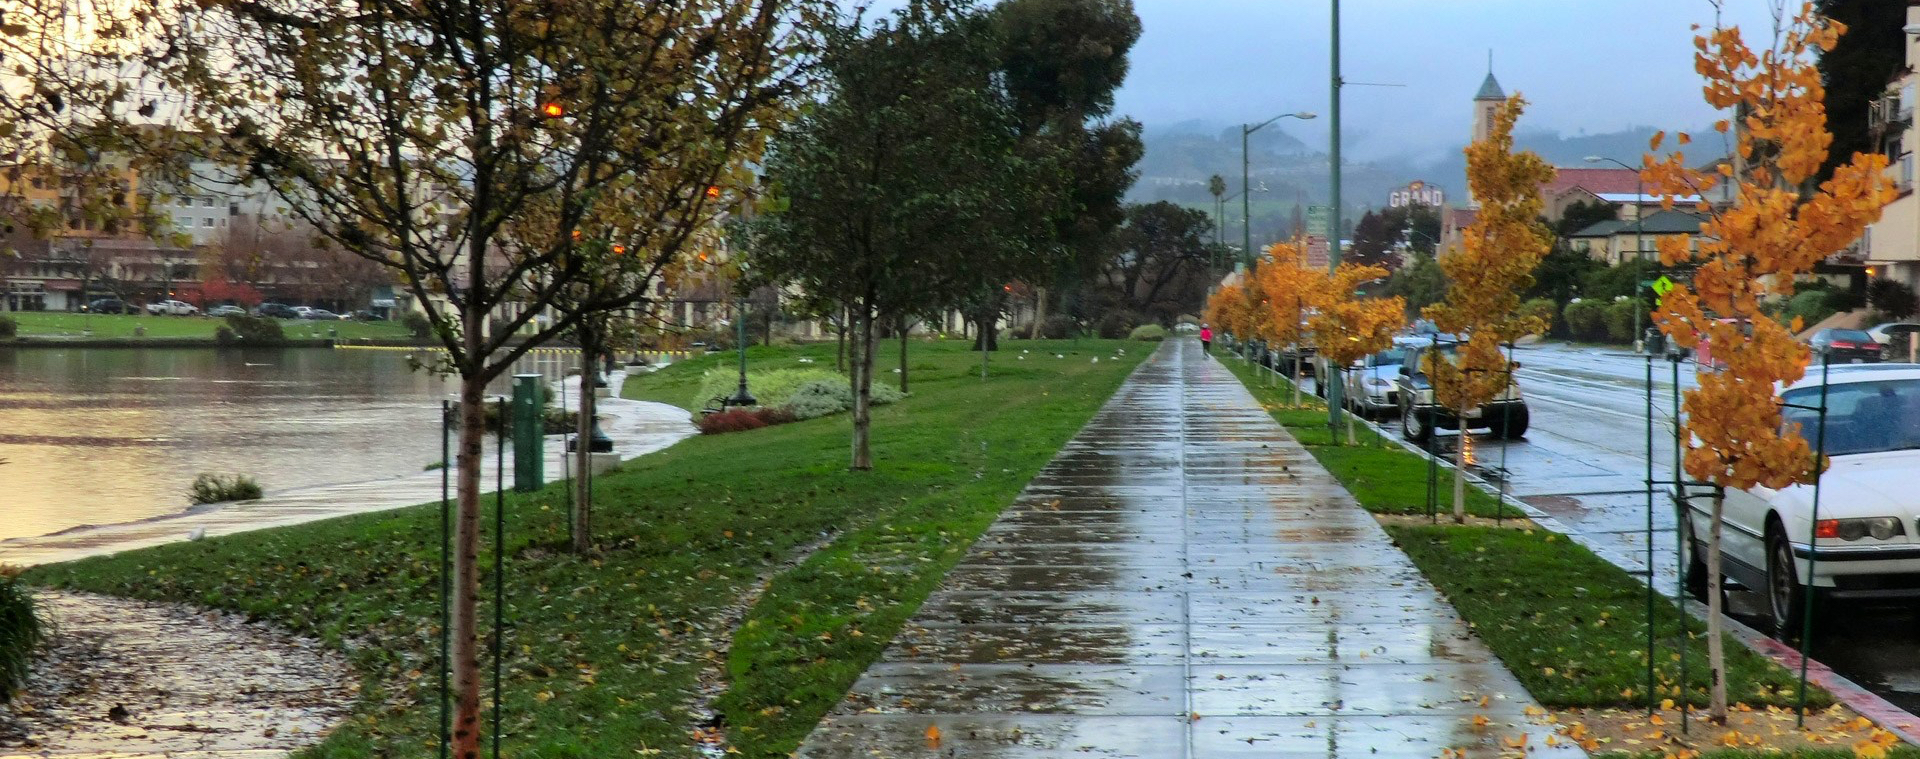 rainy-sidewalk-6049